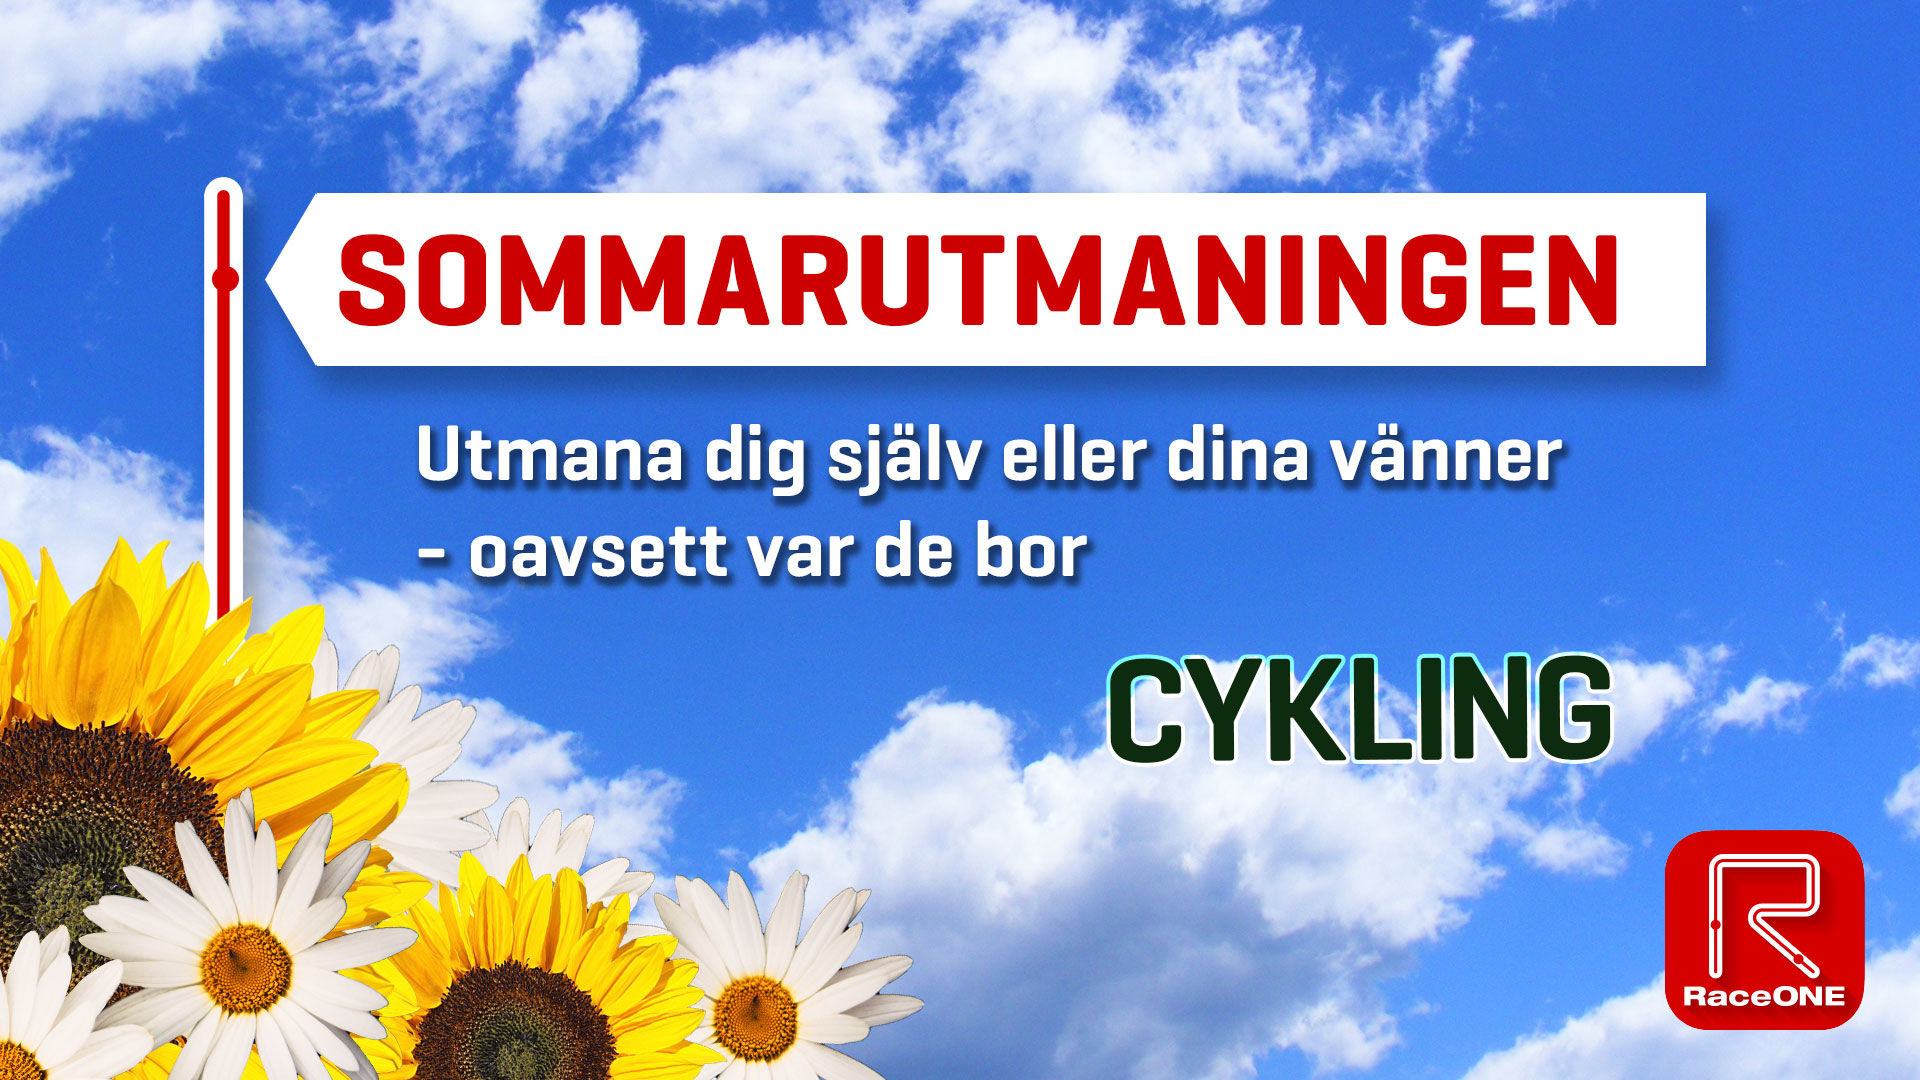 RaceONE Sommarutmaning - Cykling - 21km - Augusti 2020